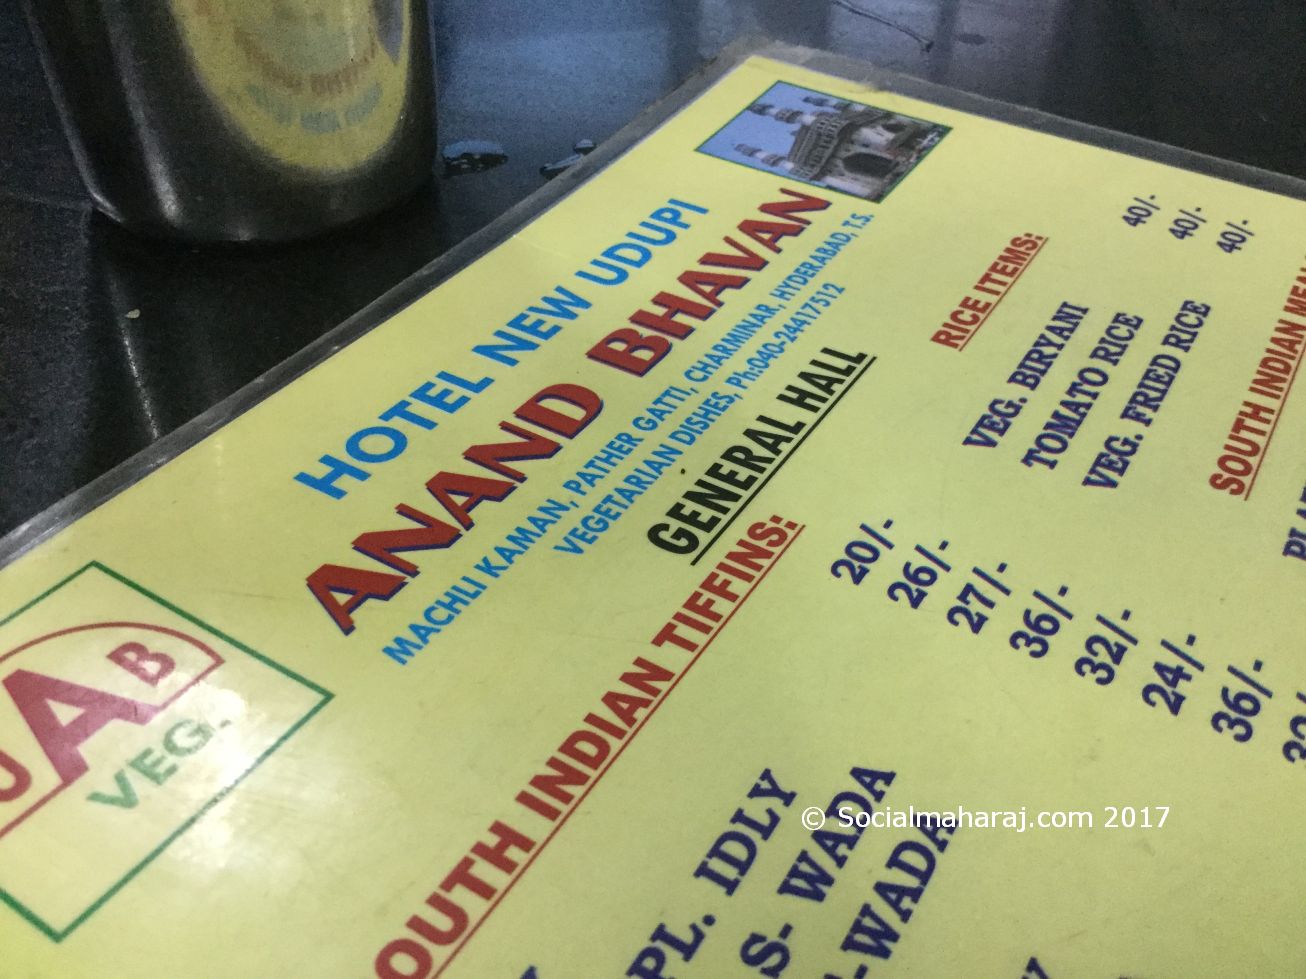 Anand Bhavan pure vegetarian restaurant.